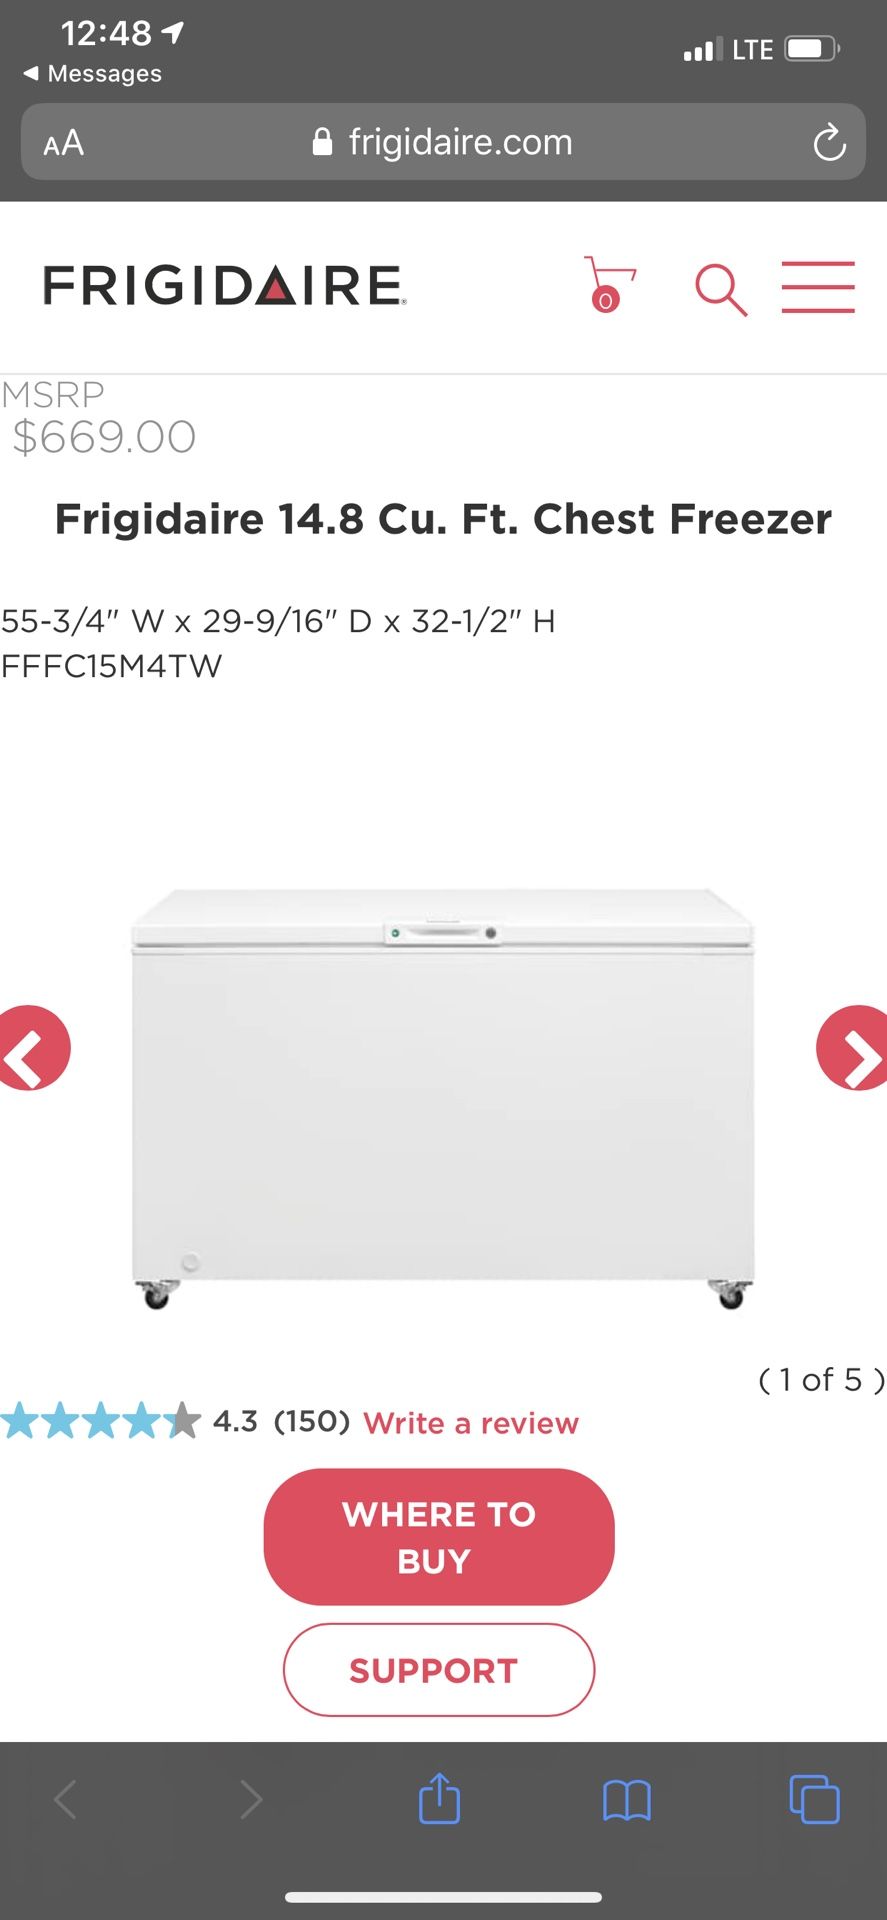 Frigidaire 14.8 Cu. Ft. Chest freezer